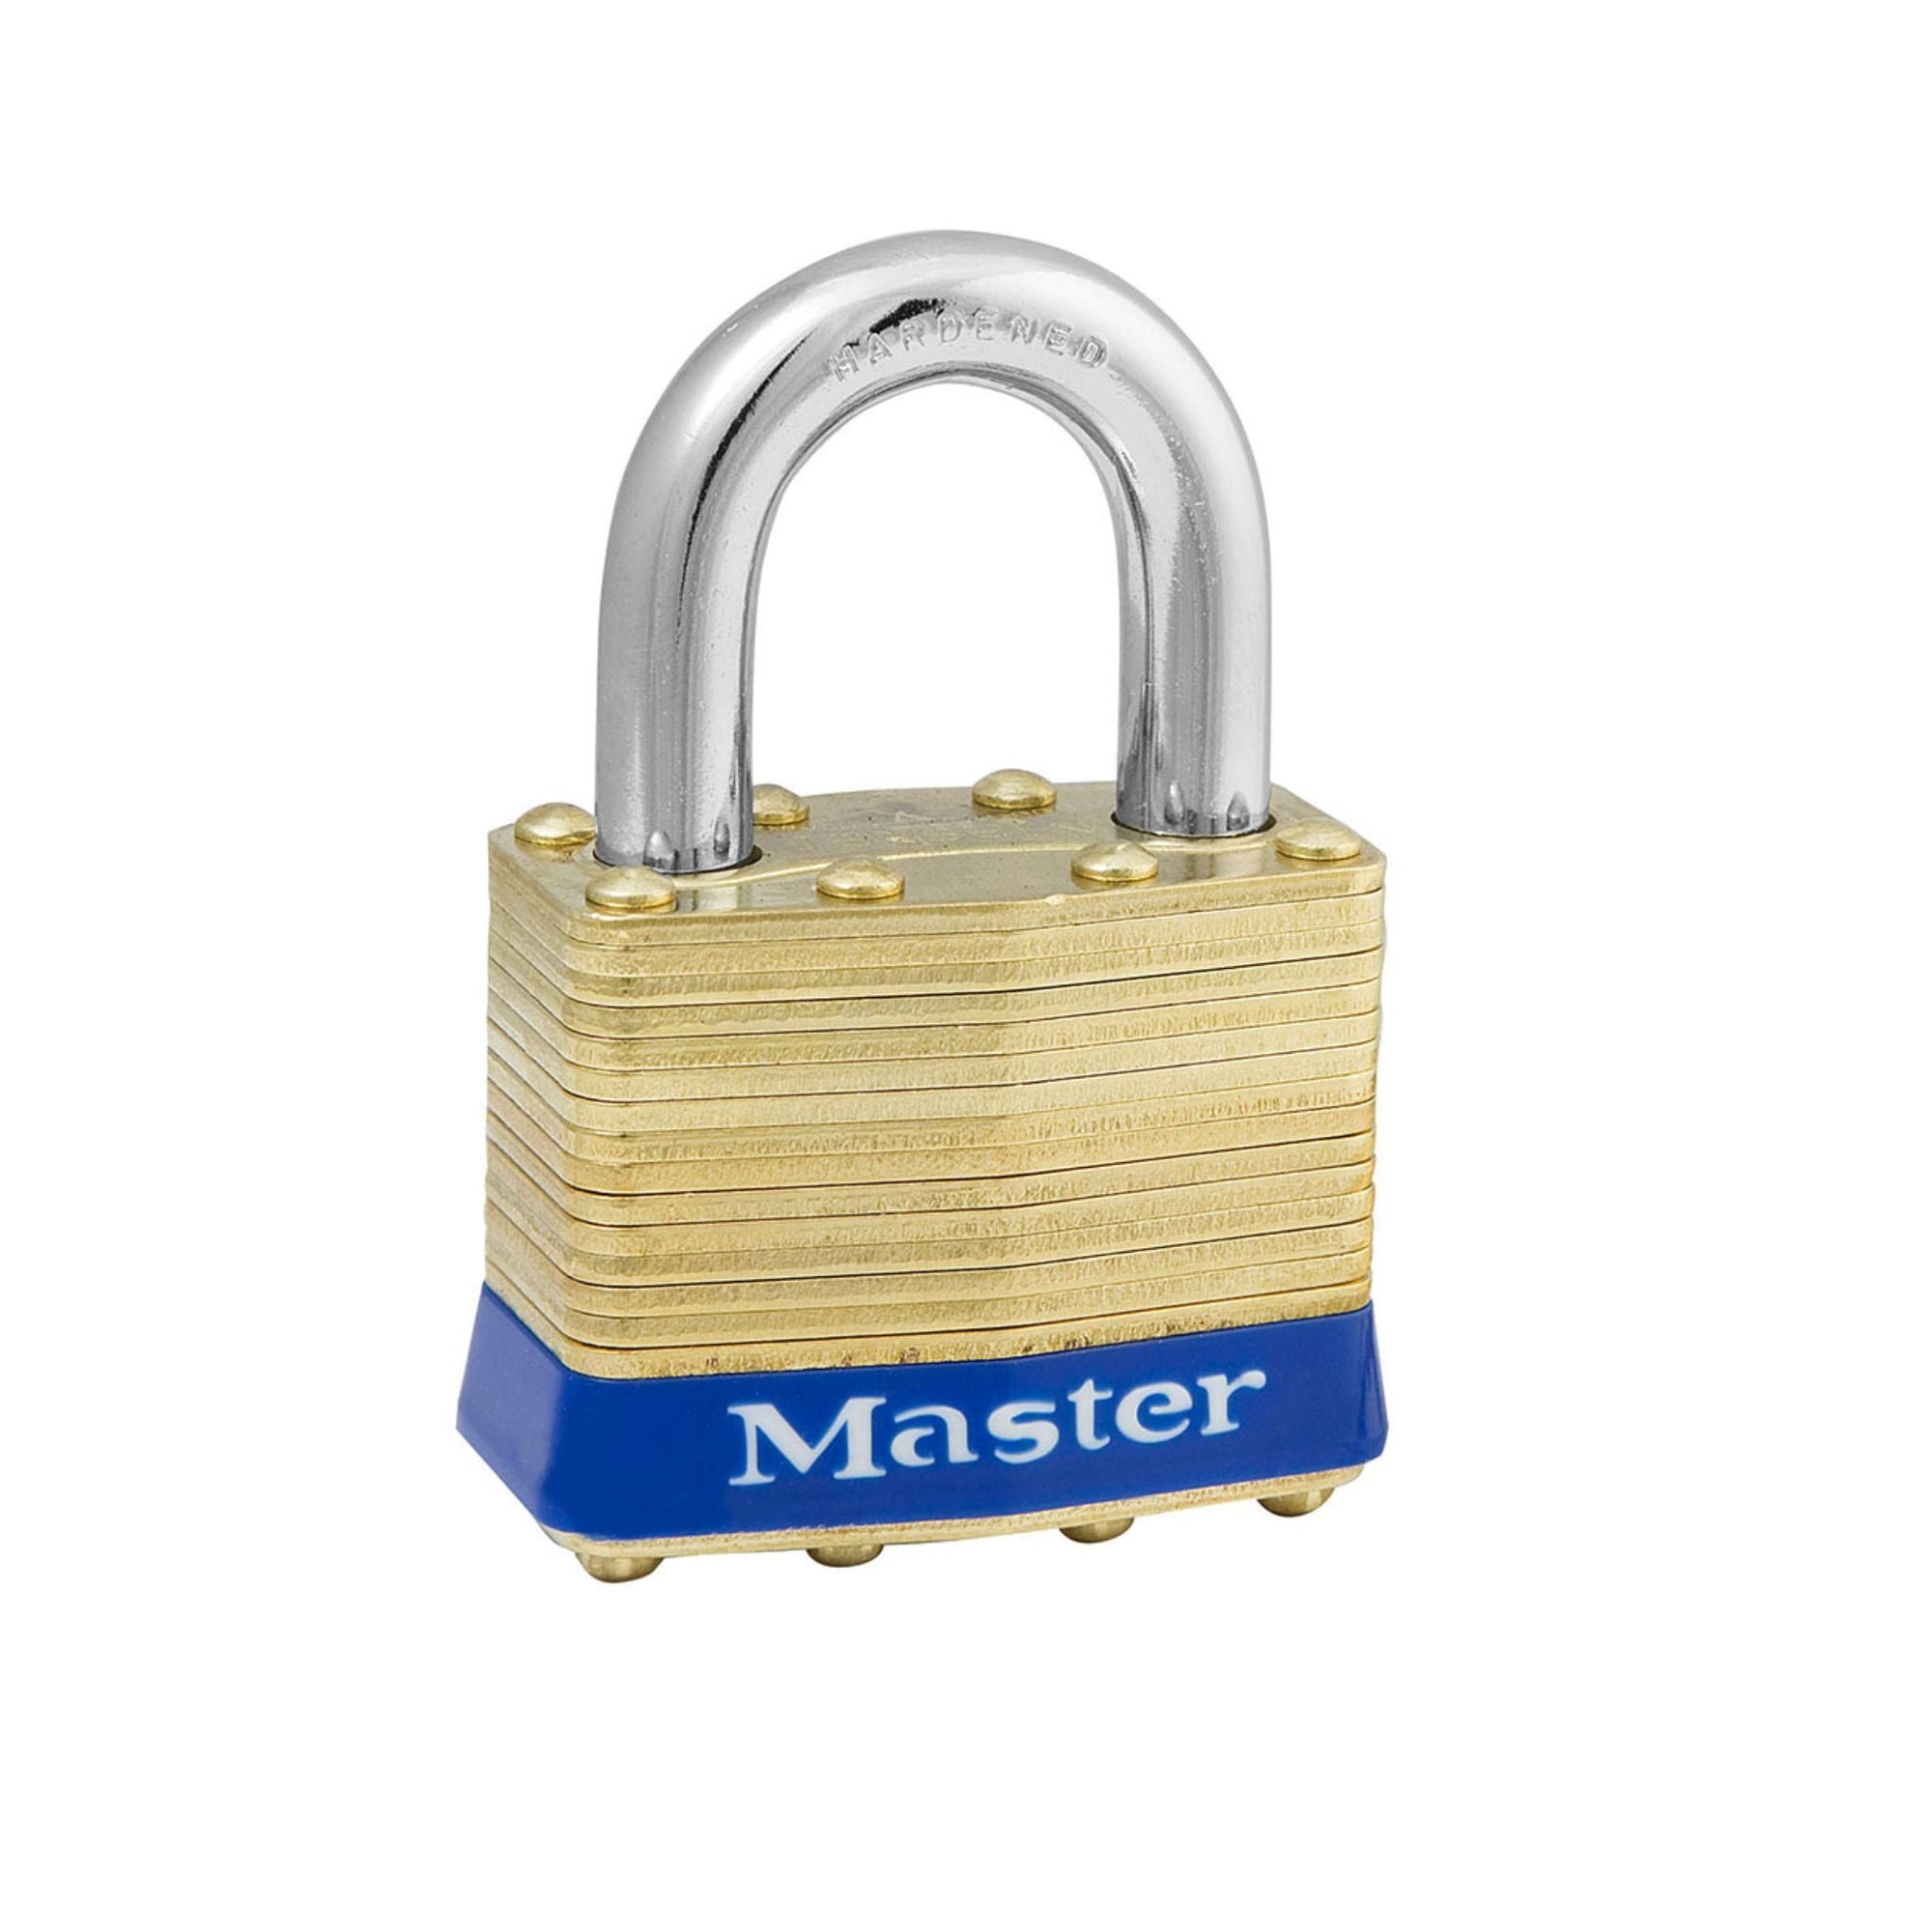 Master Lock 2KA 0301 Lock Laminated brass No. 2 Series Padlock Keyed to Match Existing Key Number KA0301 - The Lock Source